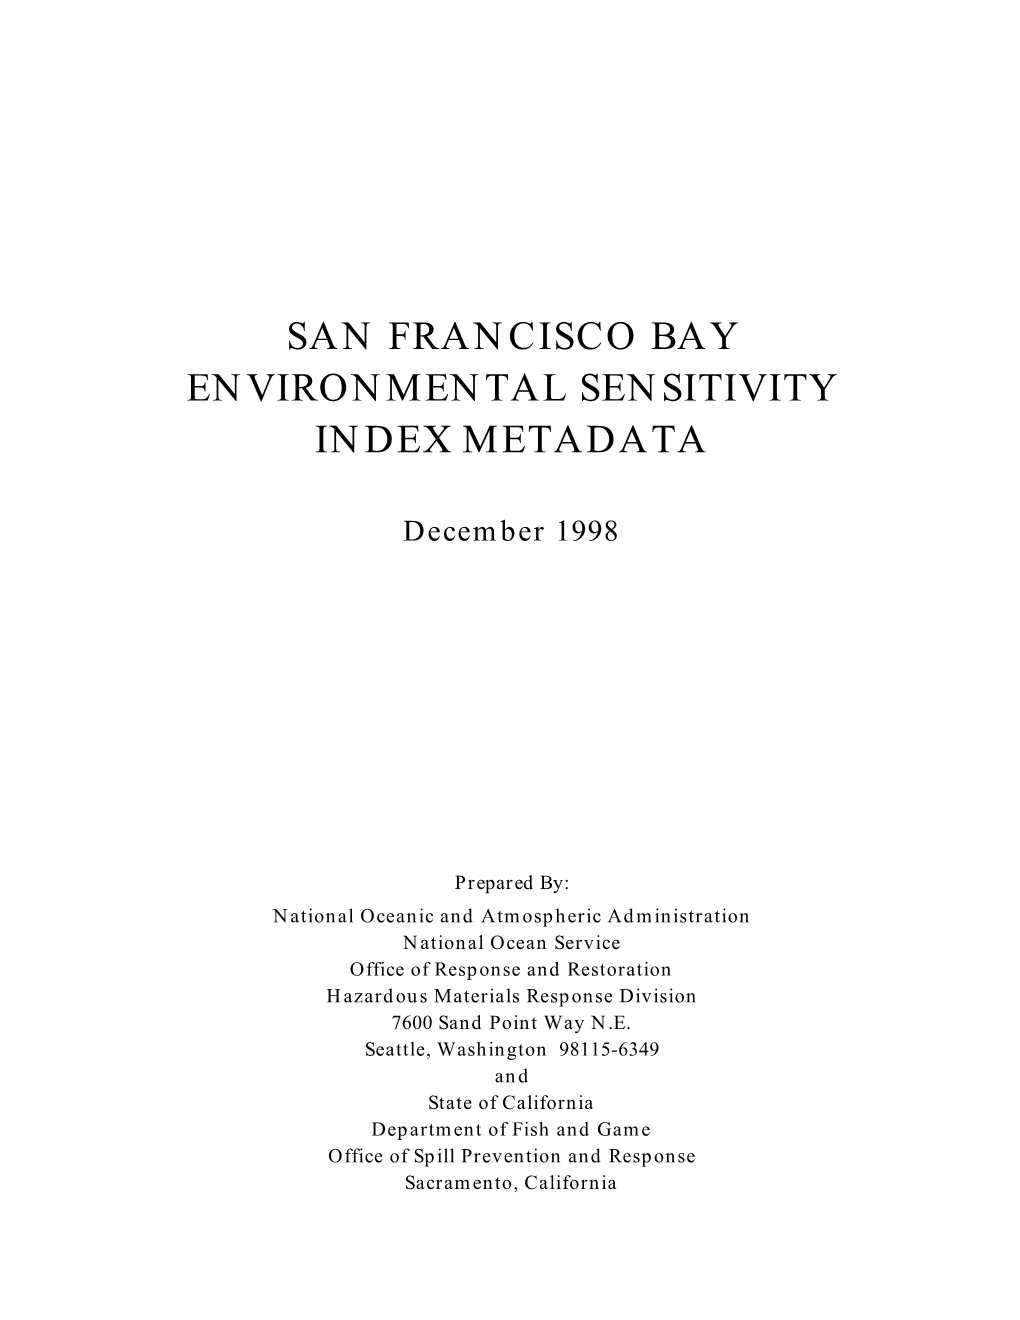 Metadata for San Francisco Bay Environmental Sensitivity Index Metadata